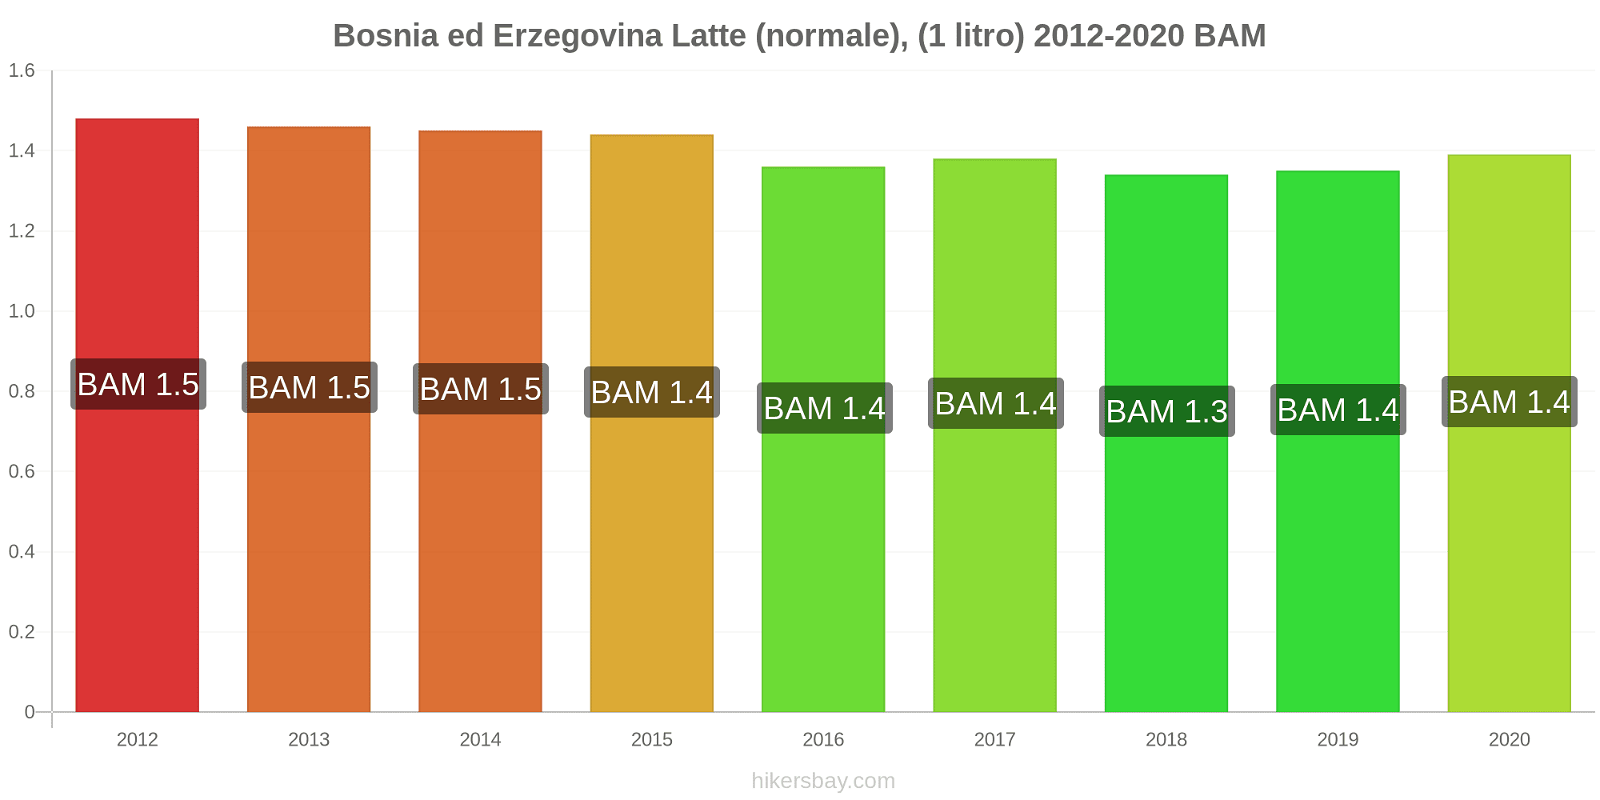 Bosnia ed Erzegovina variazioni di prezzo Latte (1 litro) hikersbay.com